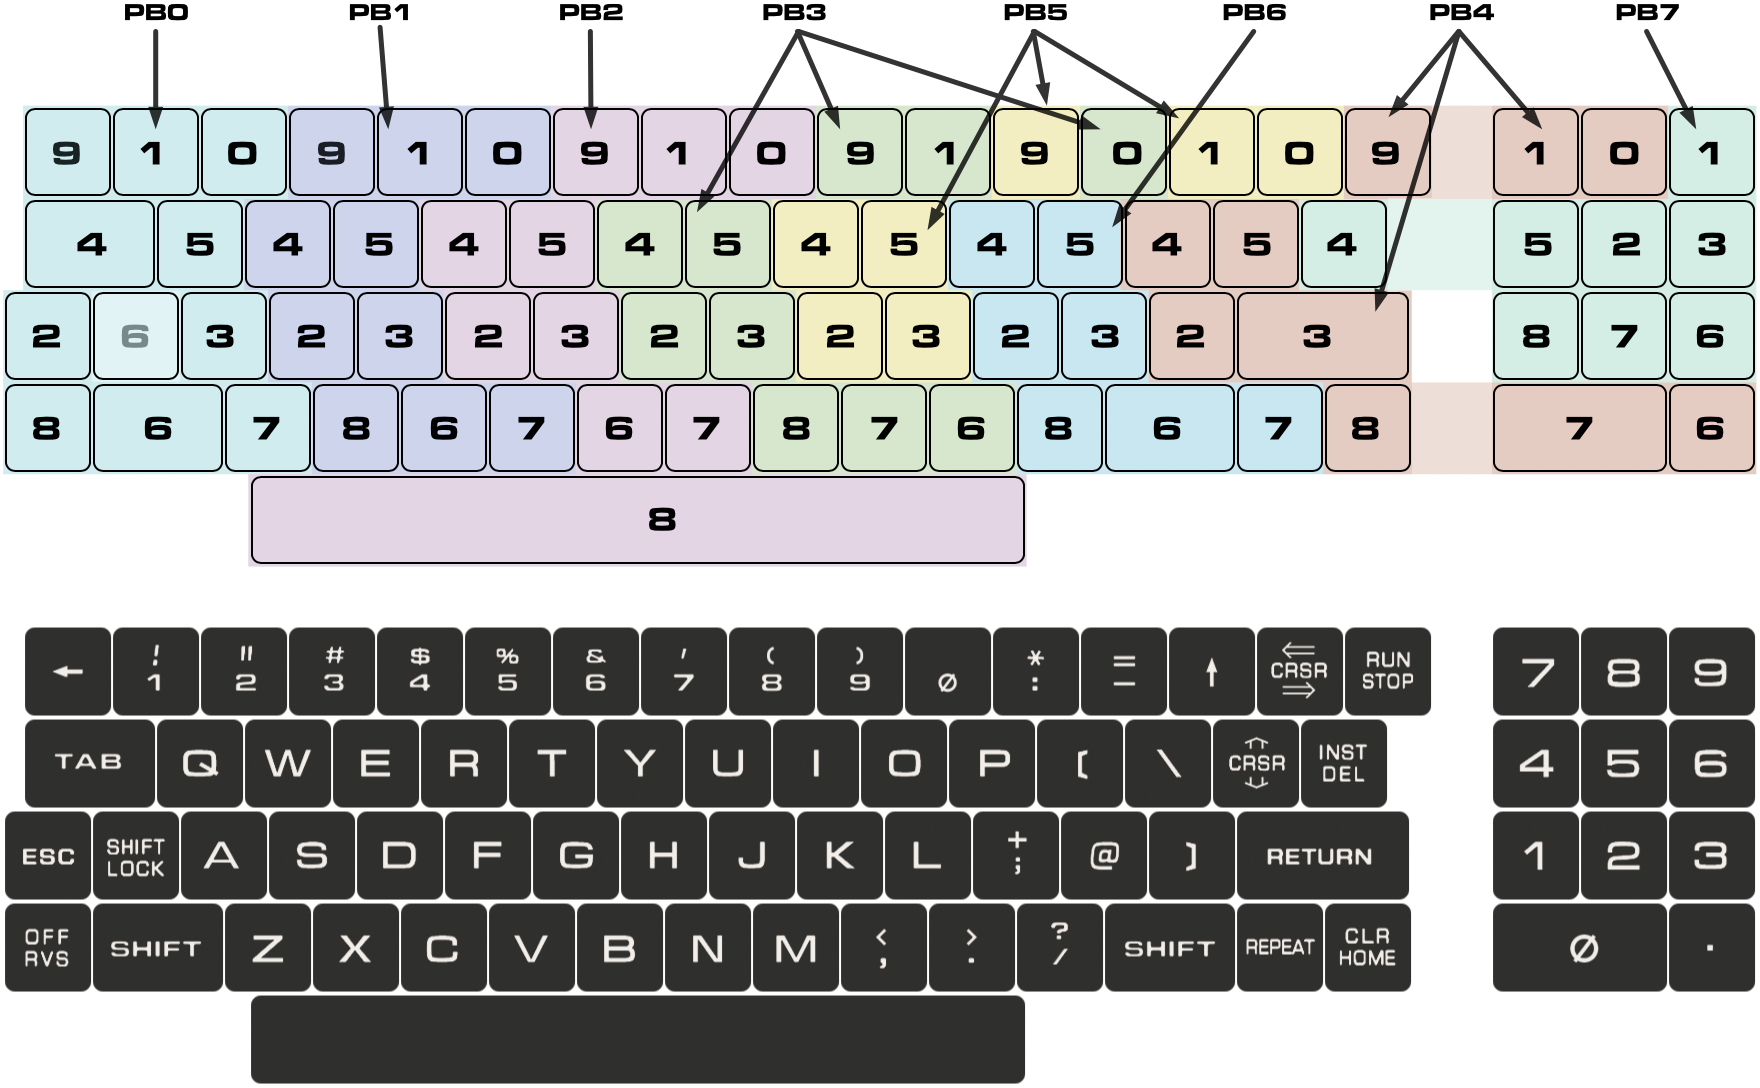 The Commodore business keyboard: layout and key matrix